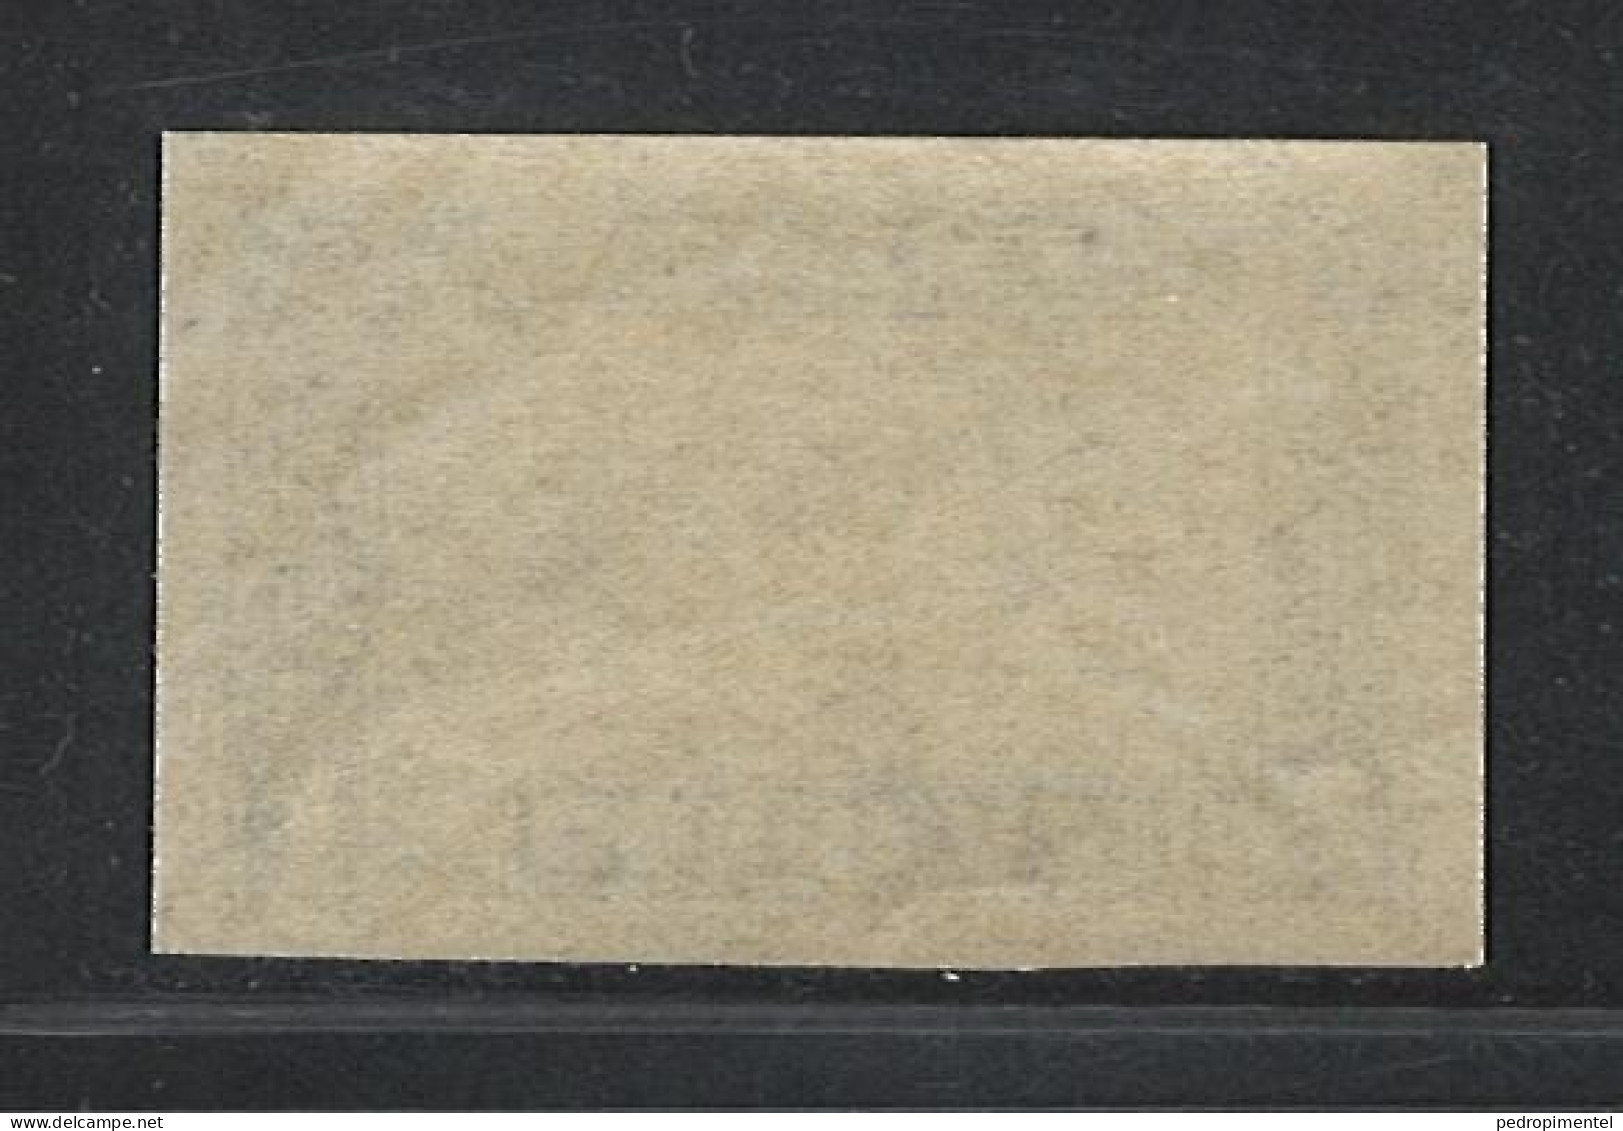 Spain Stamps | 1937 | Ano Jubilar Frame |  MNH Unperforated - Ongebruikt